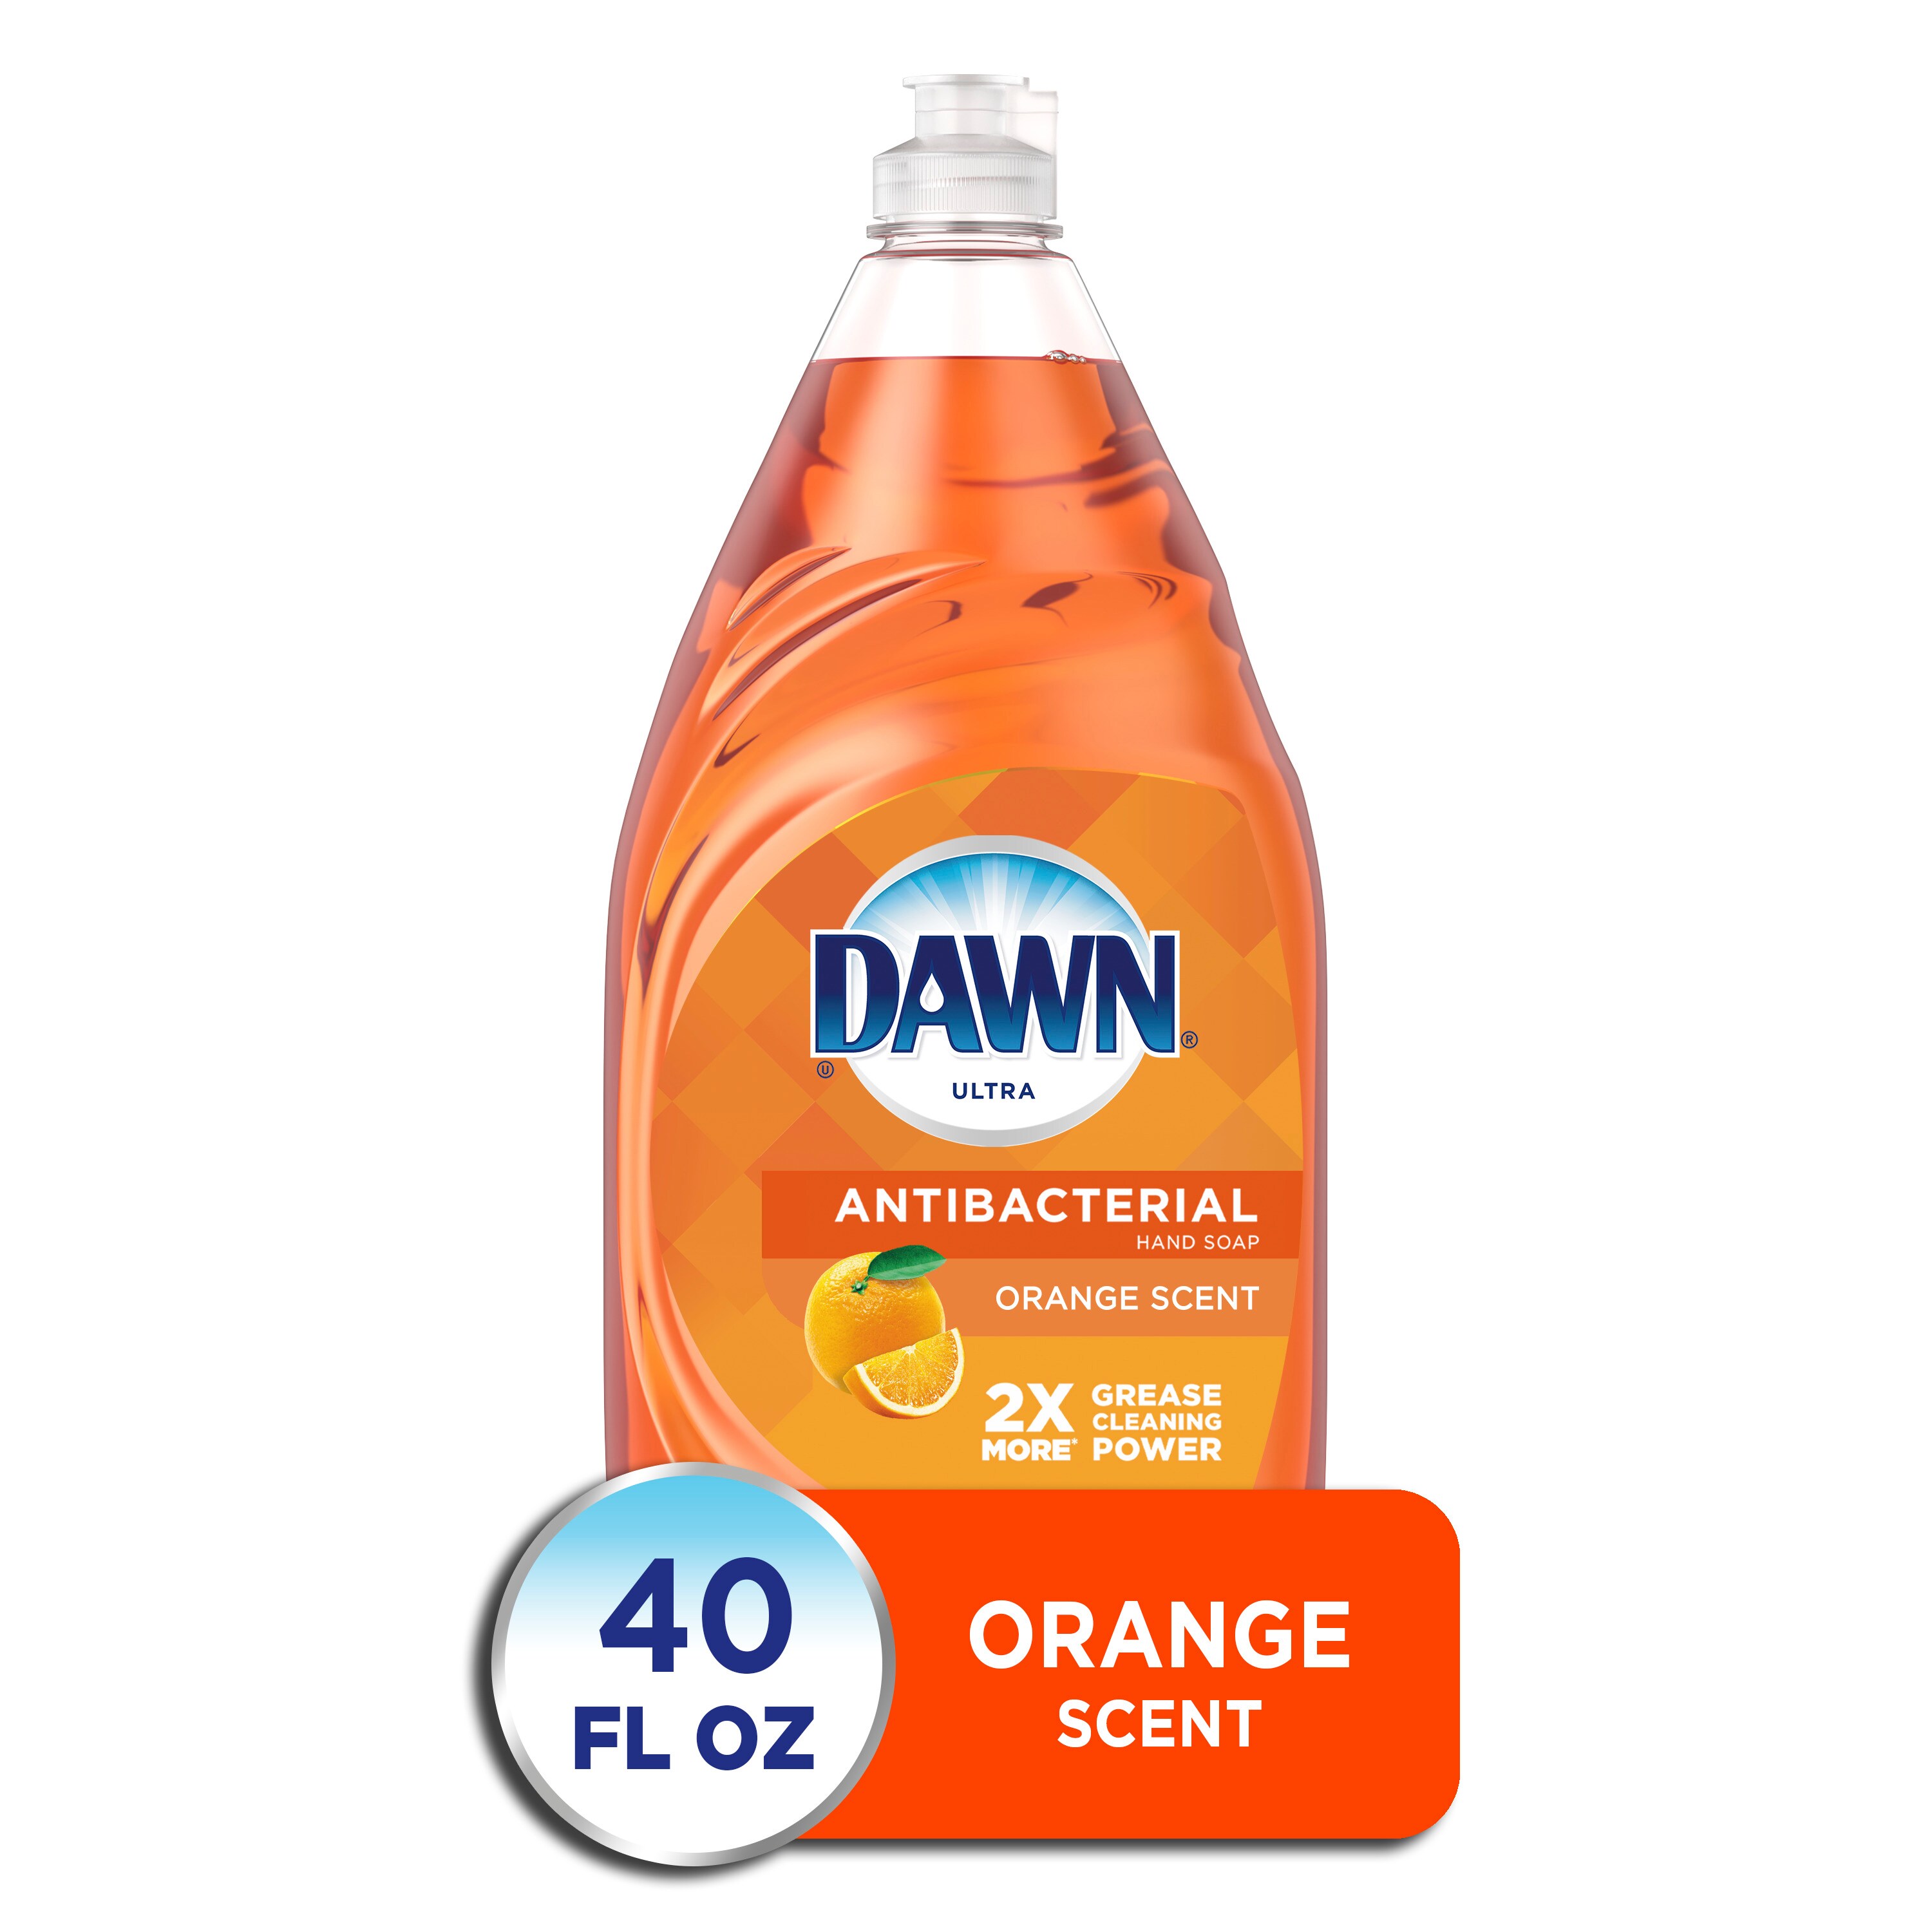 Orange Hand Soap | 32 oz